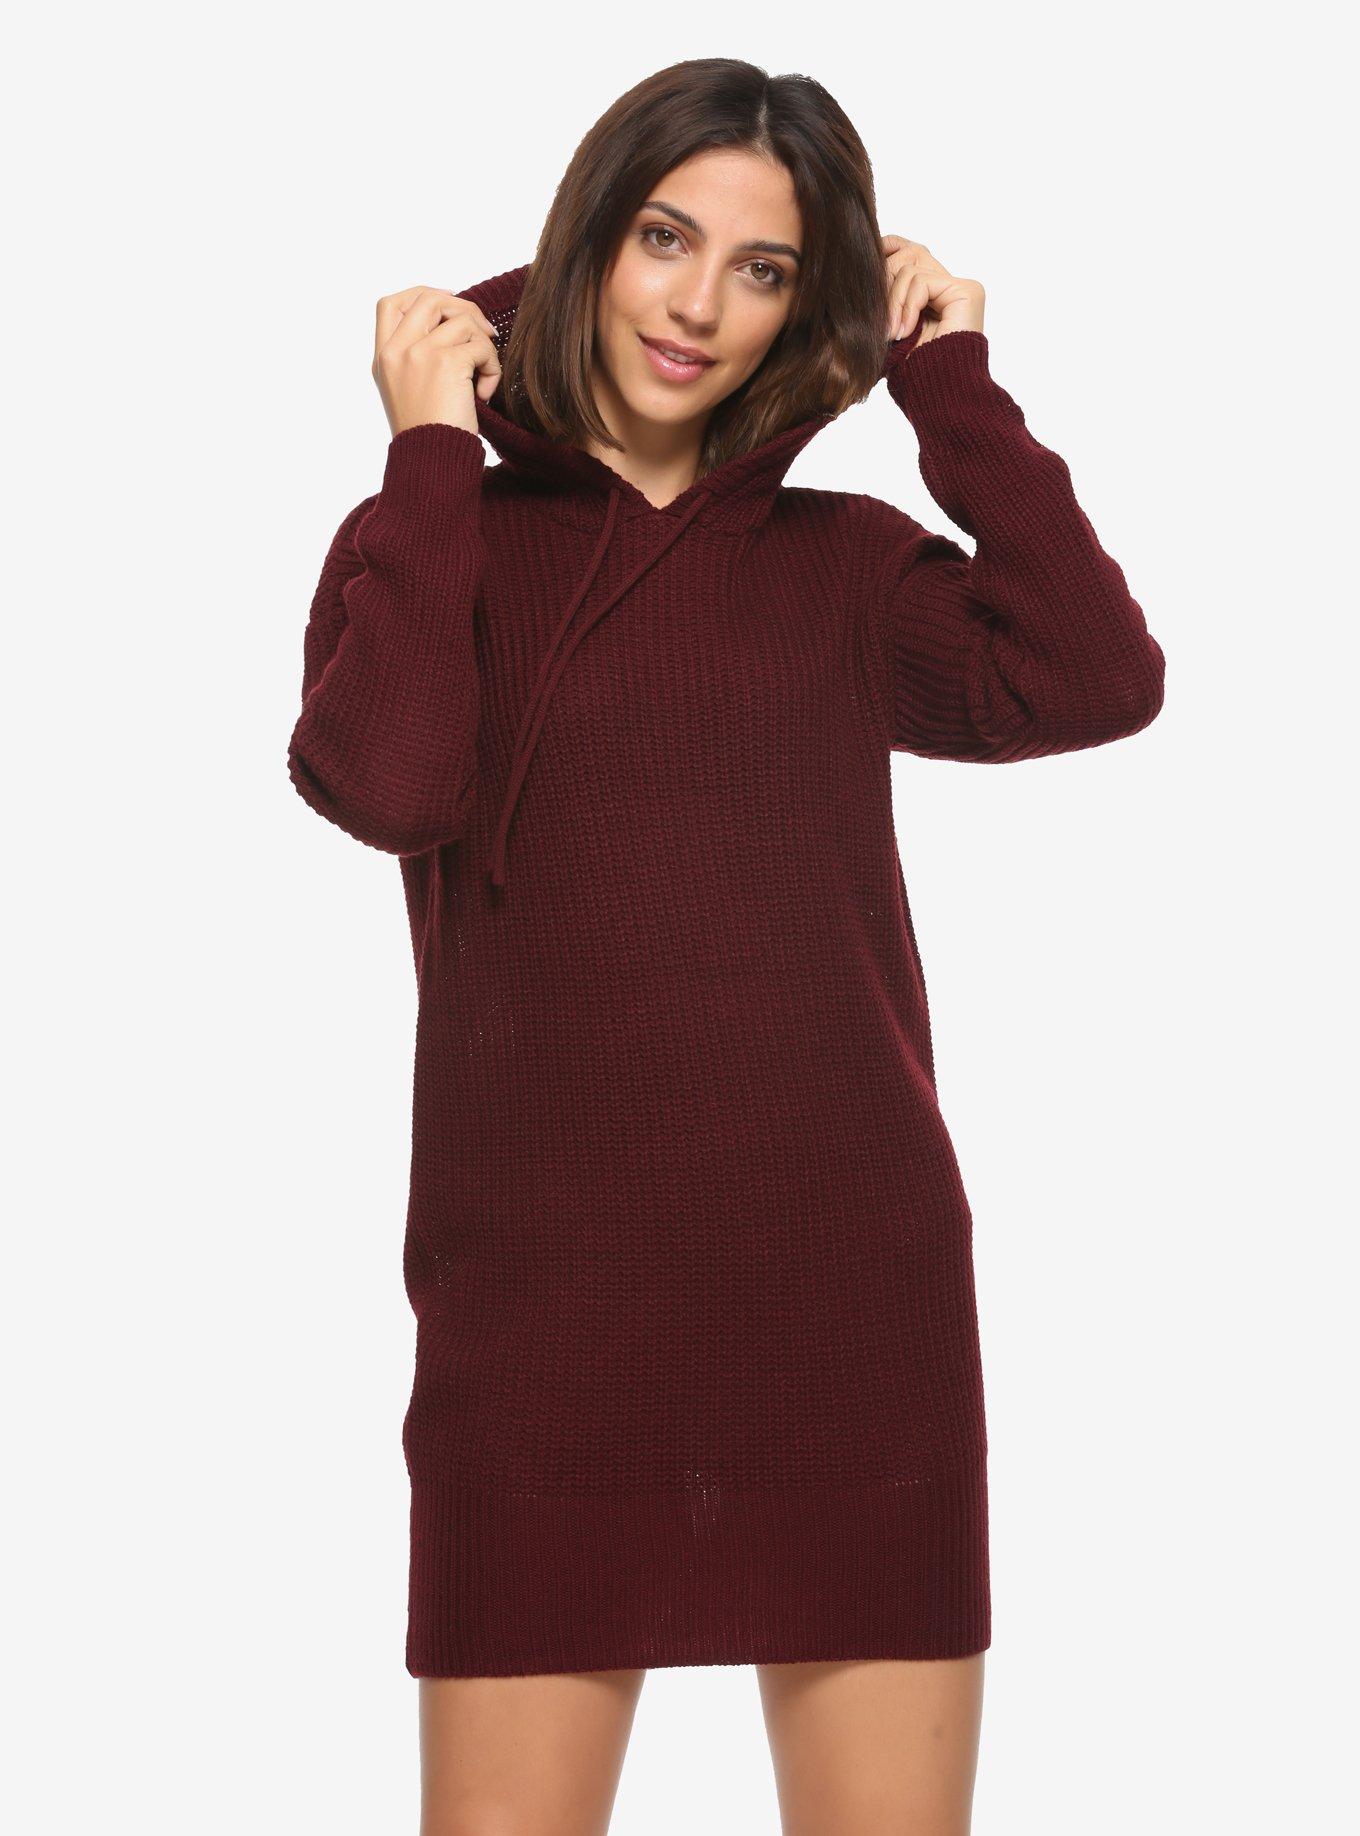 Merlot Hooded Sweater Dress, MERLOT, hi-res